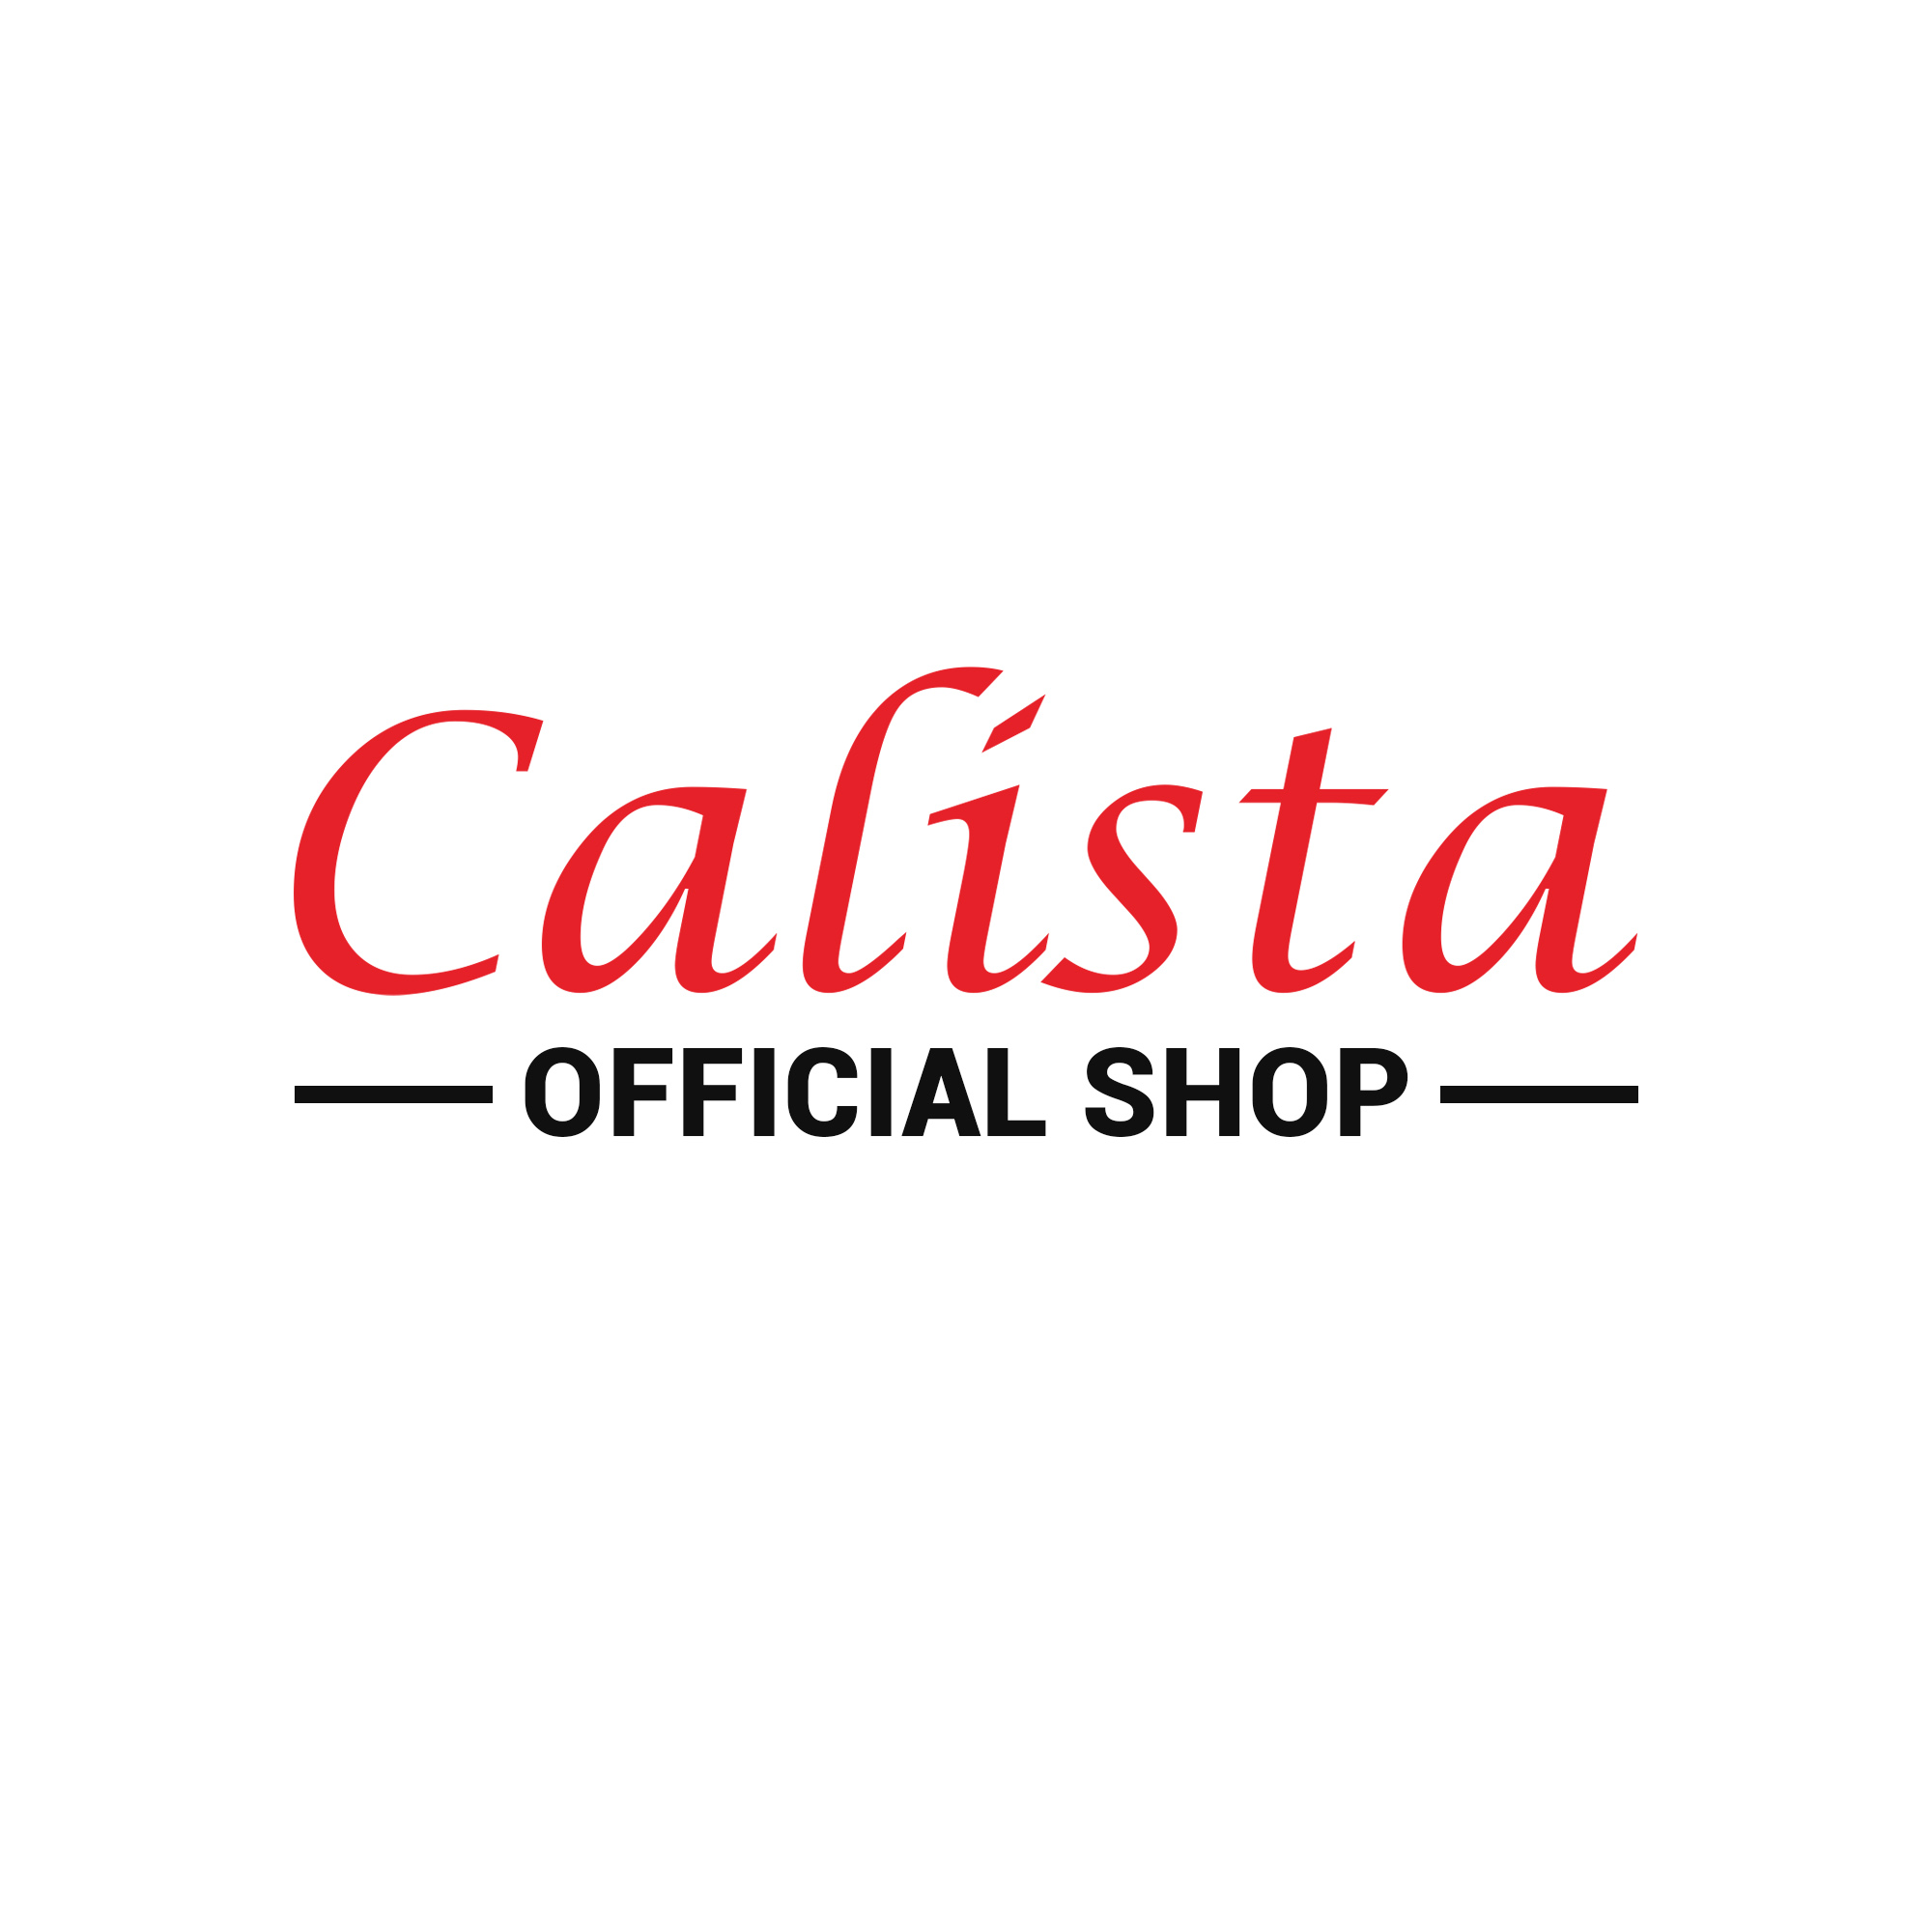 Calista Official Shop